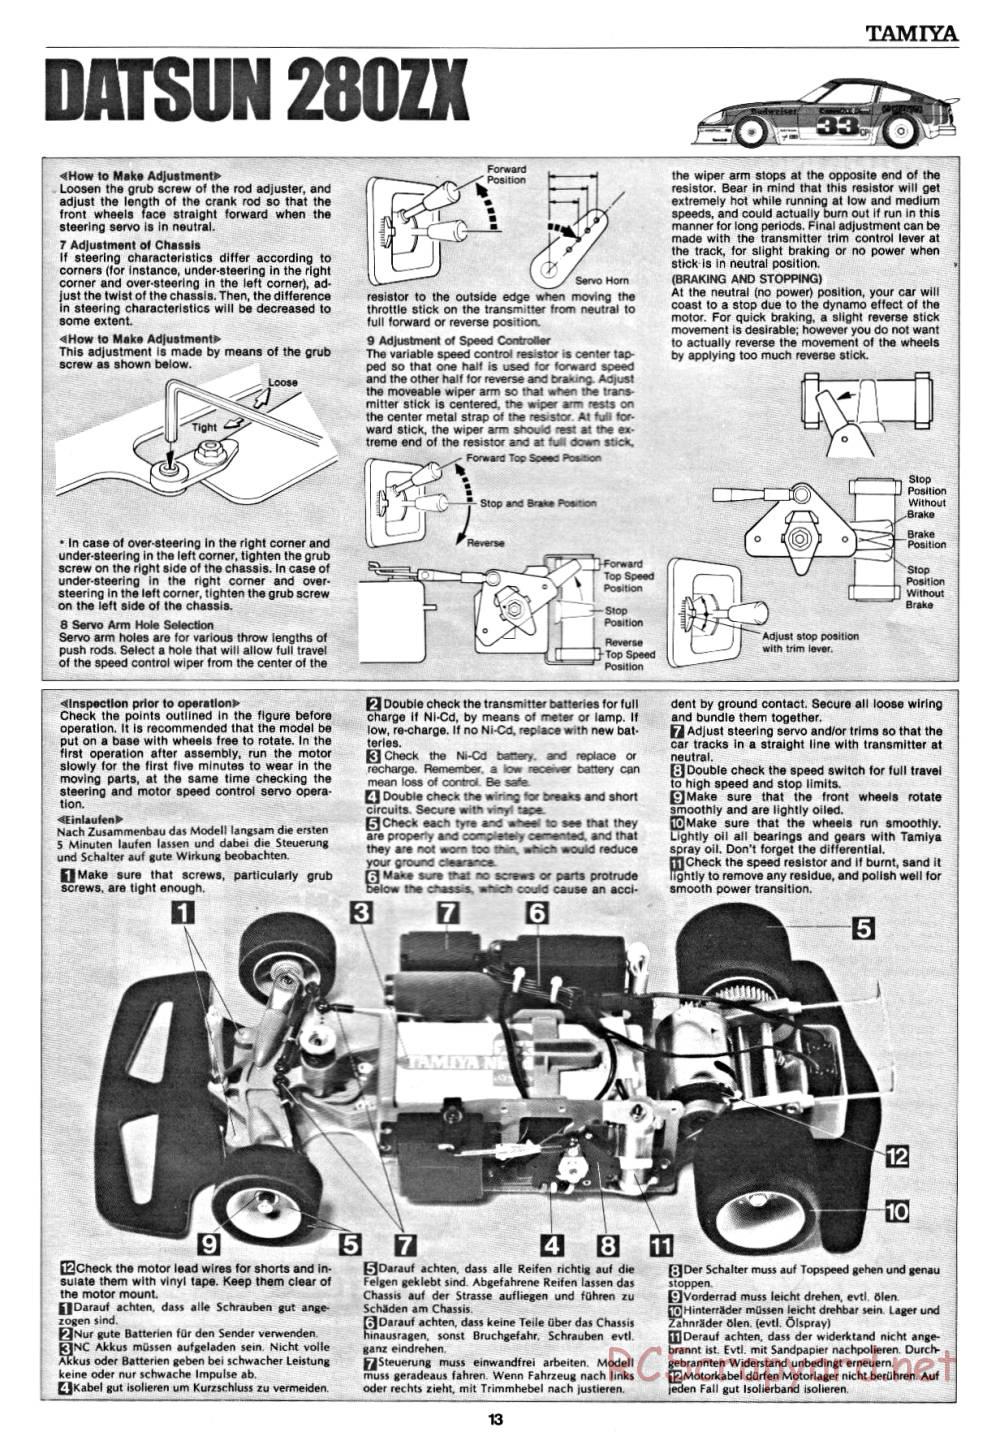 Tamiya - Datsun 280ZX - 58022 - Manual - Page 13